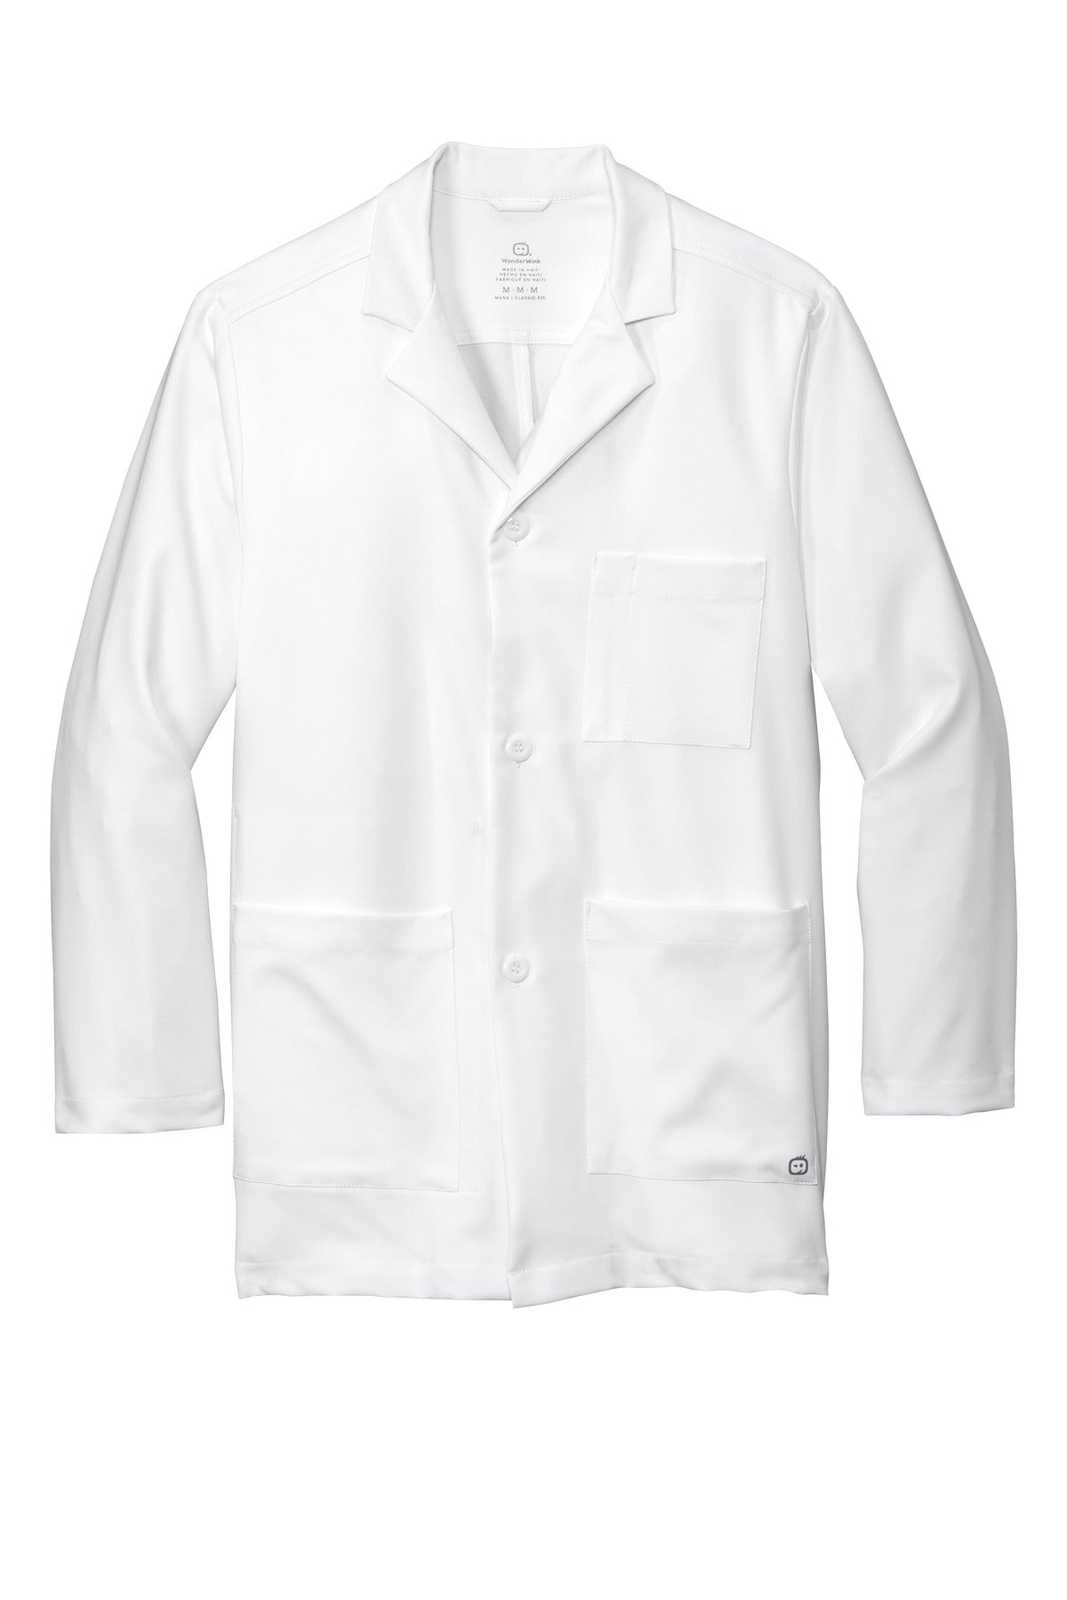 Wonderwink WW5072 Men's Consultation Lab Coat - White - HIT a Double - 1